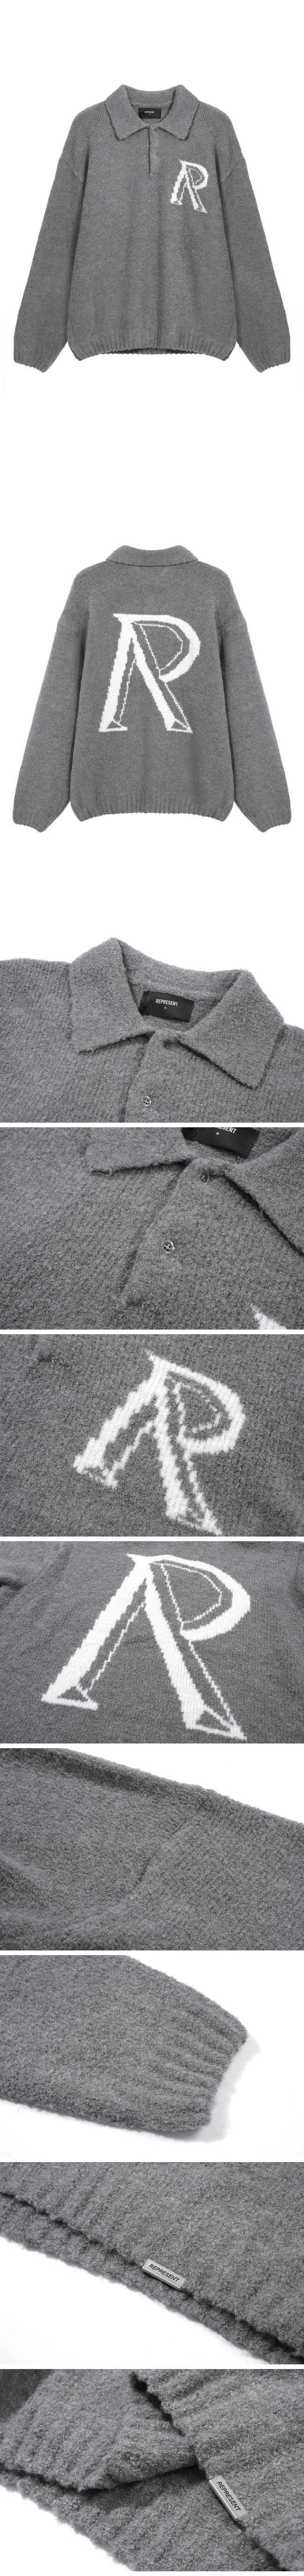 Represent R Logo Sweater リプレゼント R ロゴ セーター グレー